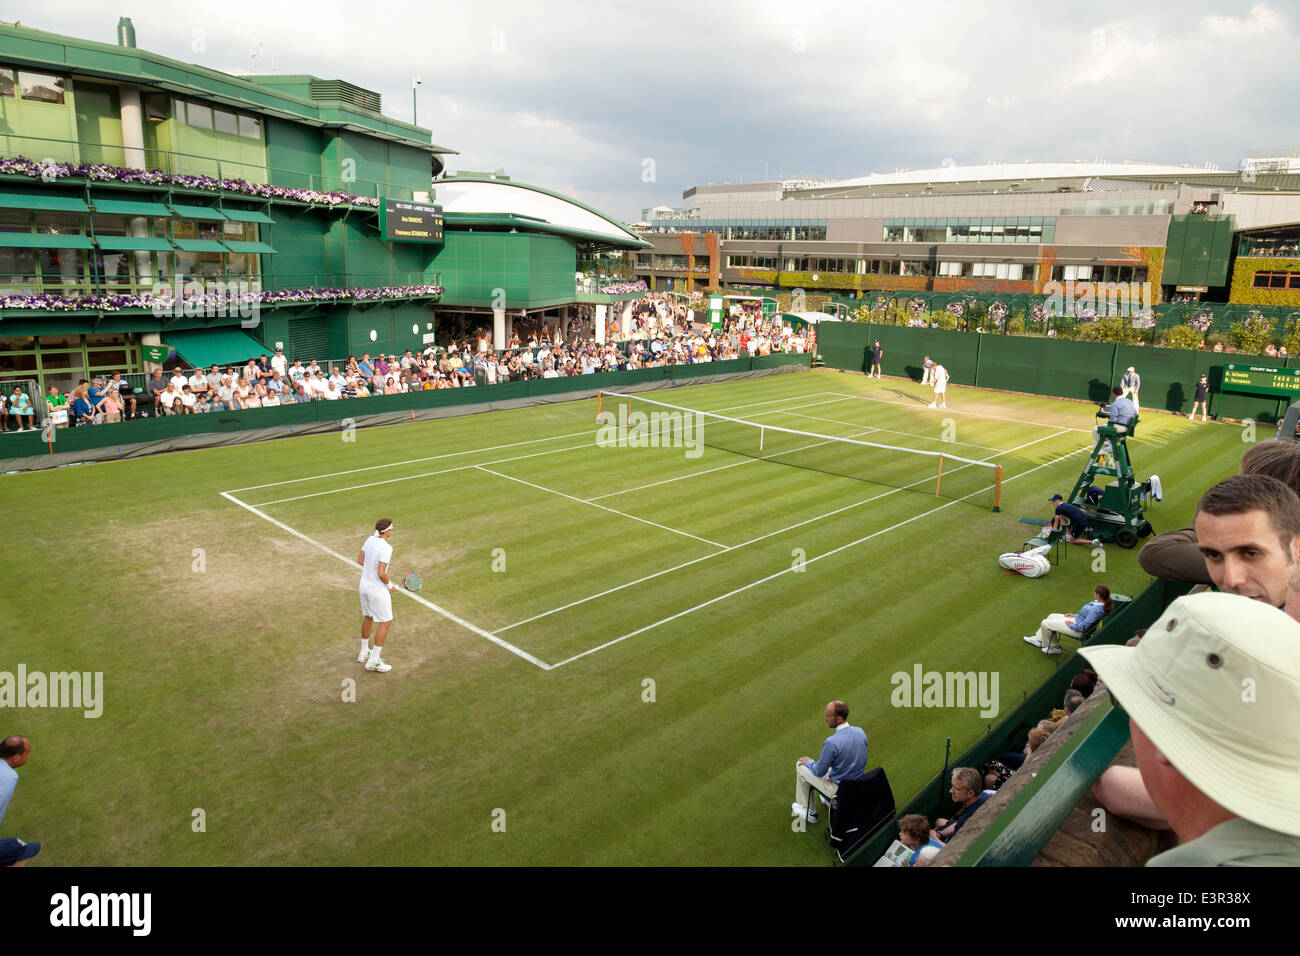 Tennis-Match auf einem äußeren Gericht, den Wimbledon All England Lawn Tennis Club Championships, Wimbledon London UK Stockfoto